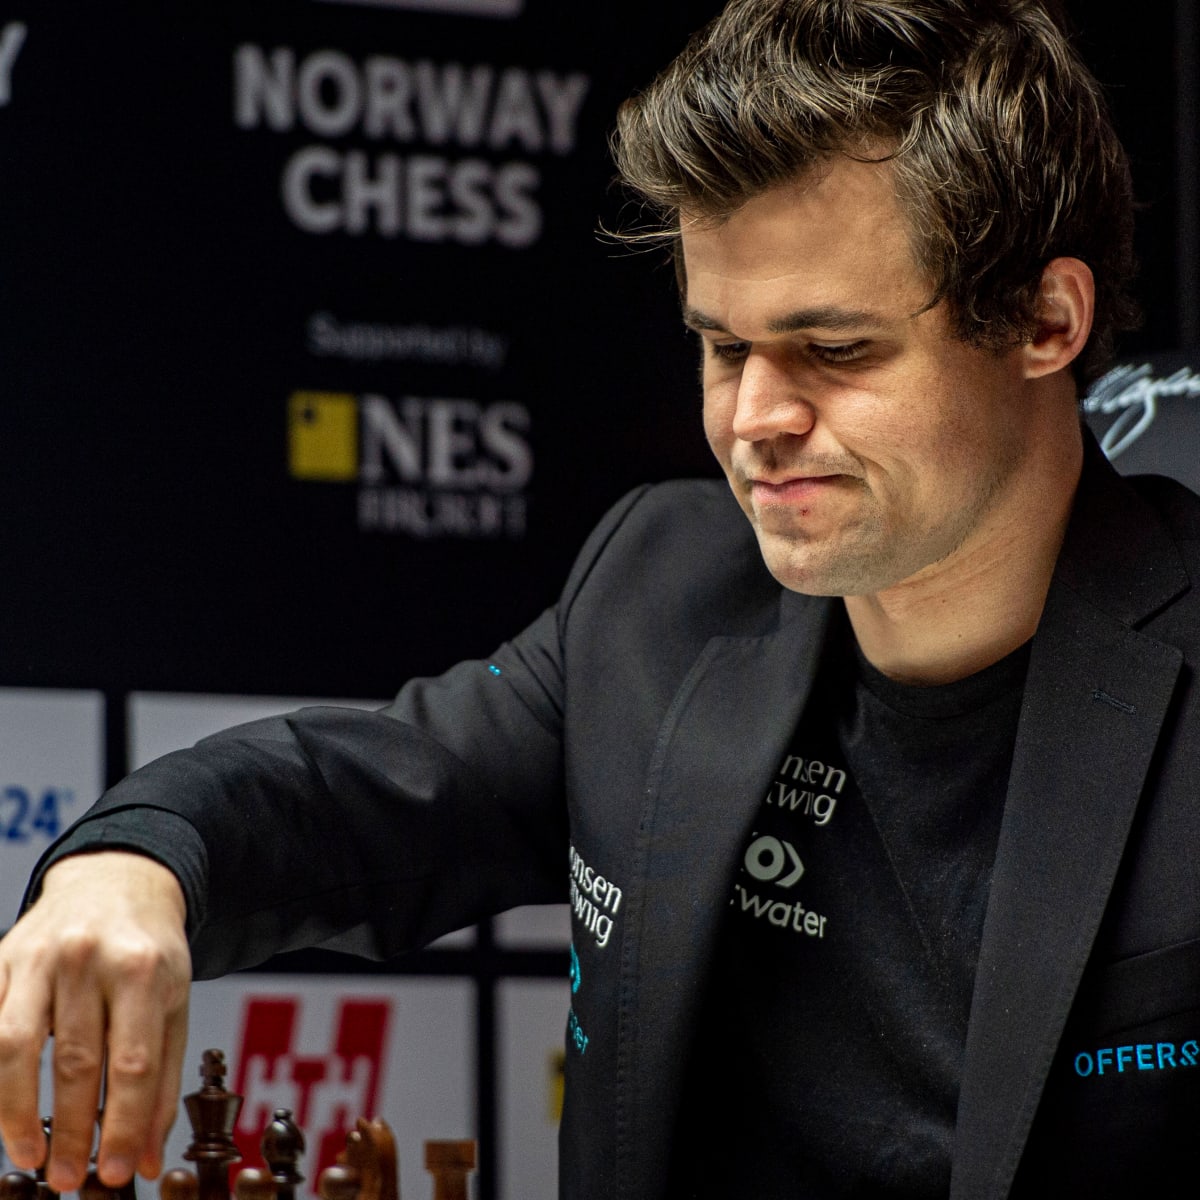 Why did Magnus Carlsen Smile? #chess #chesstok #chessmaster #chesslove